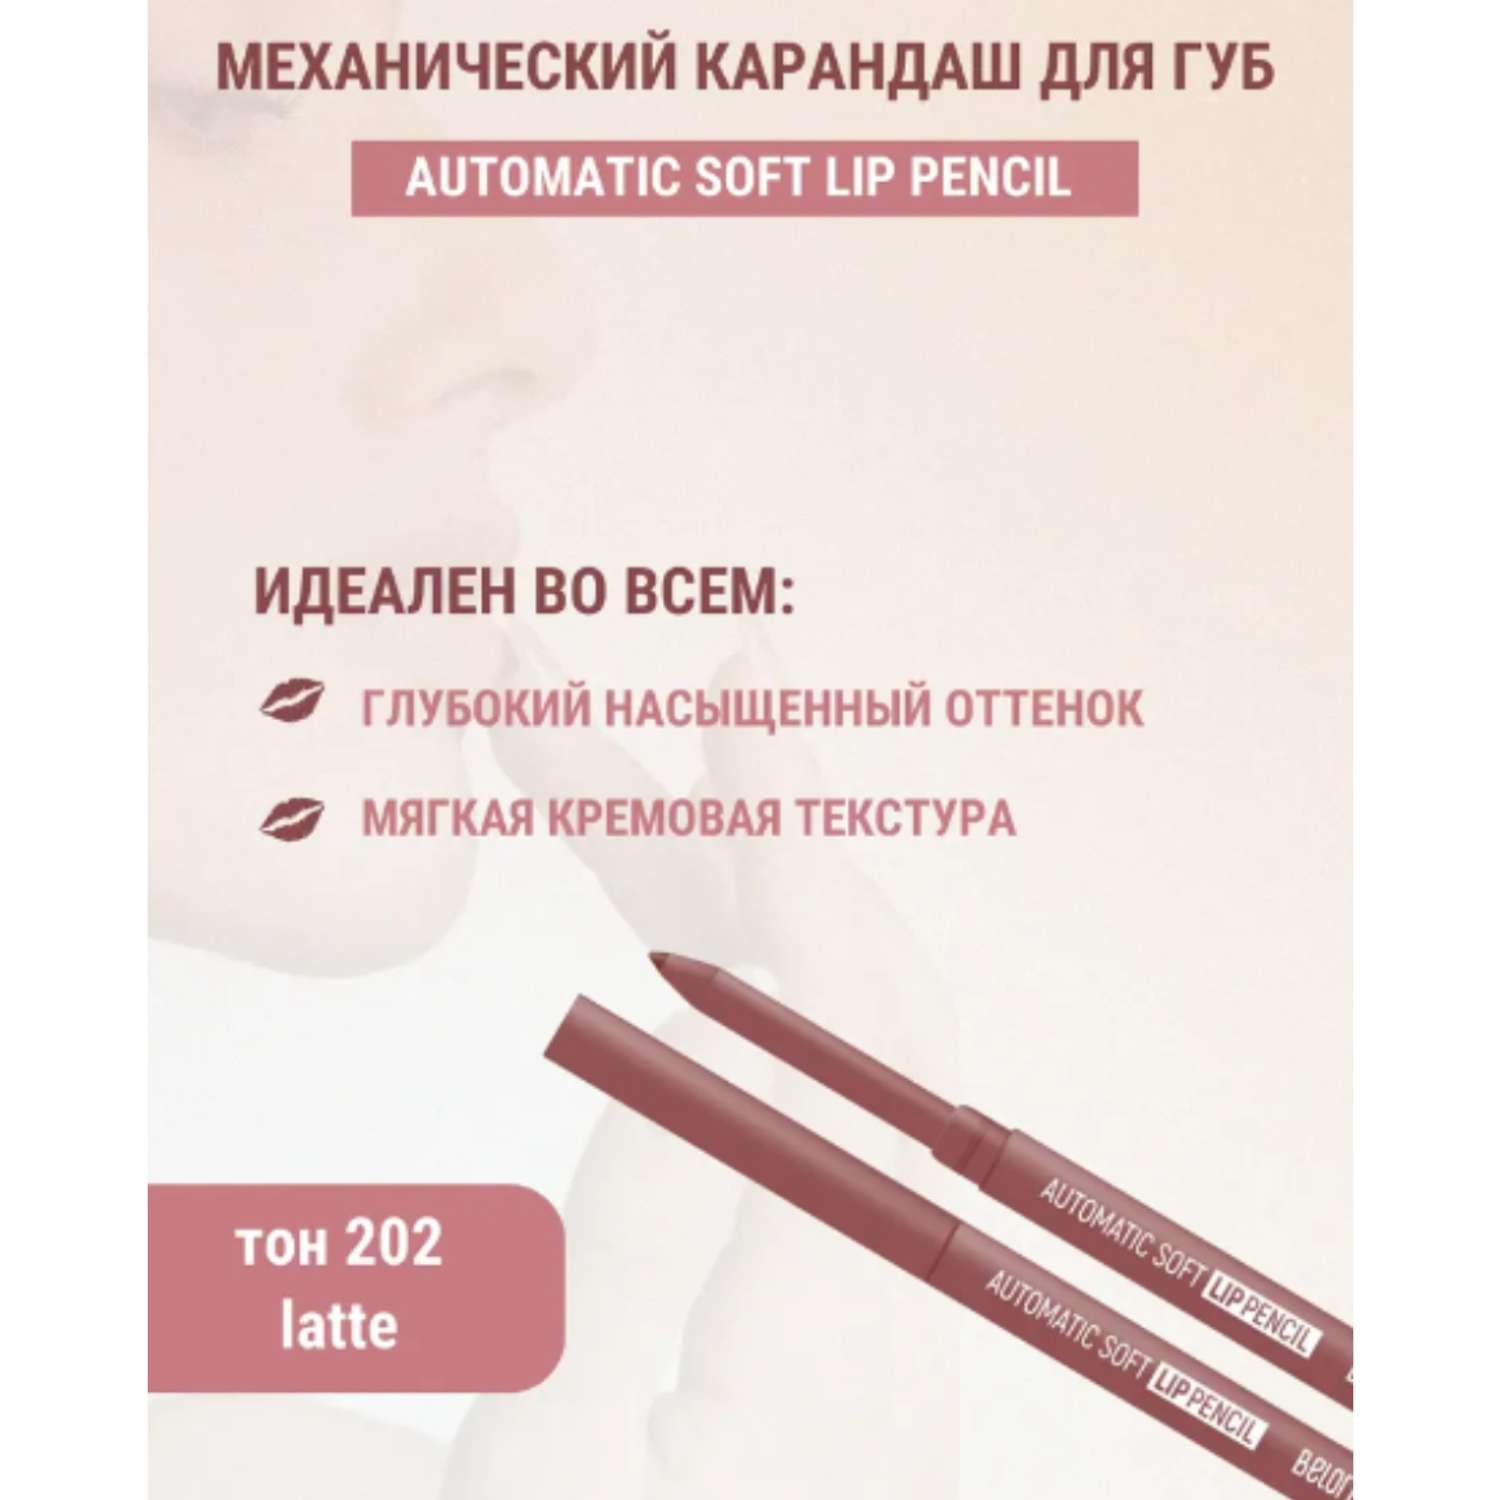 Карандаш для губ Belor Design механический automatic soft lippencil тон202 latte - фото 6